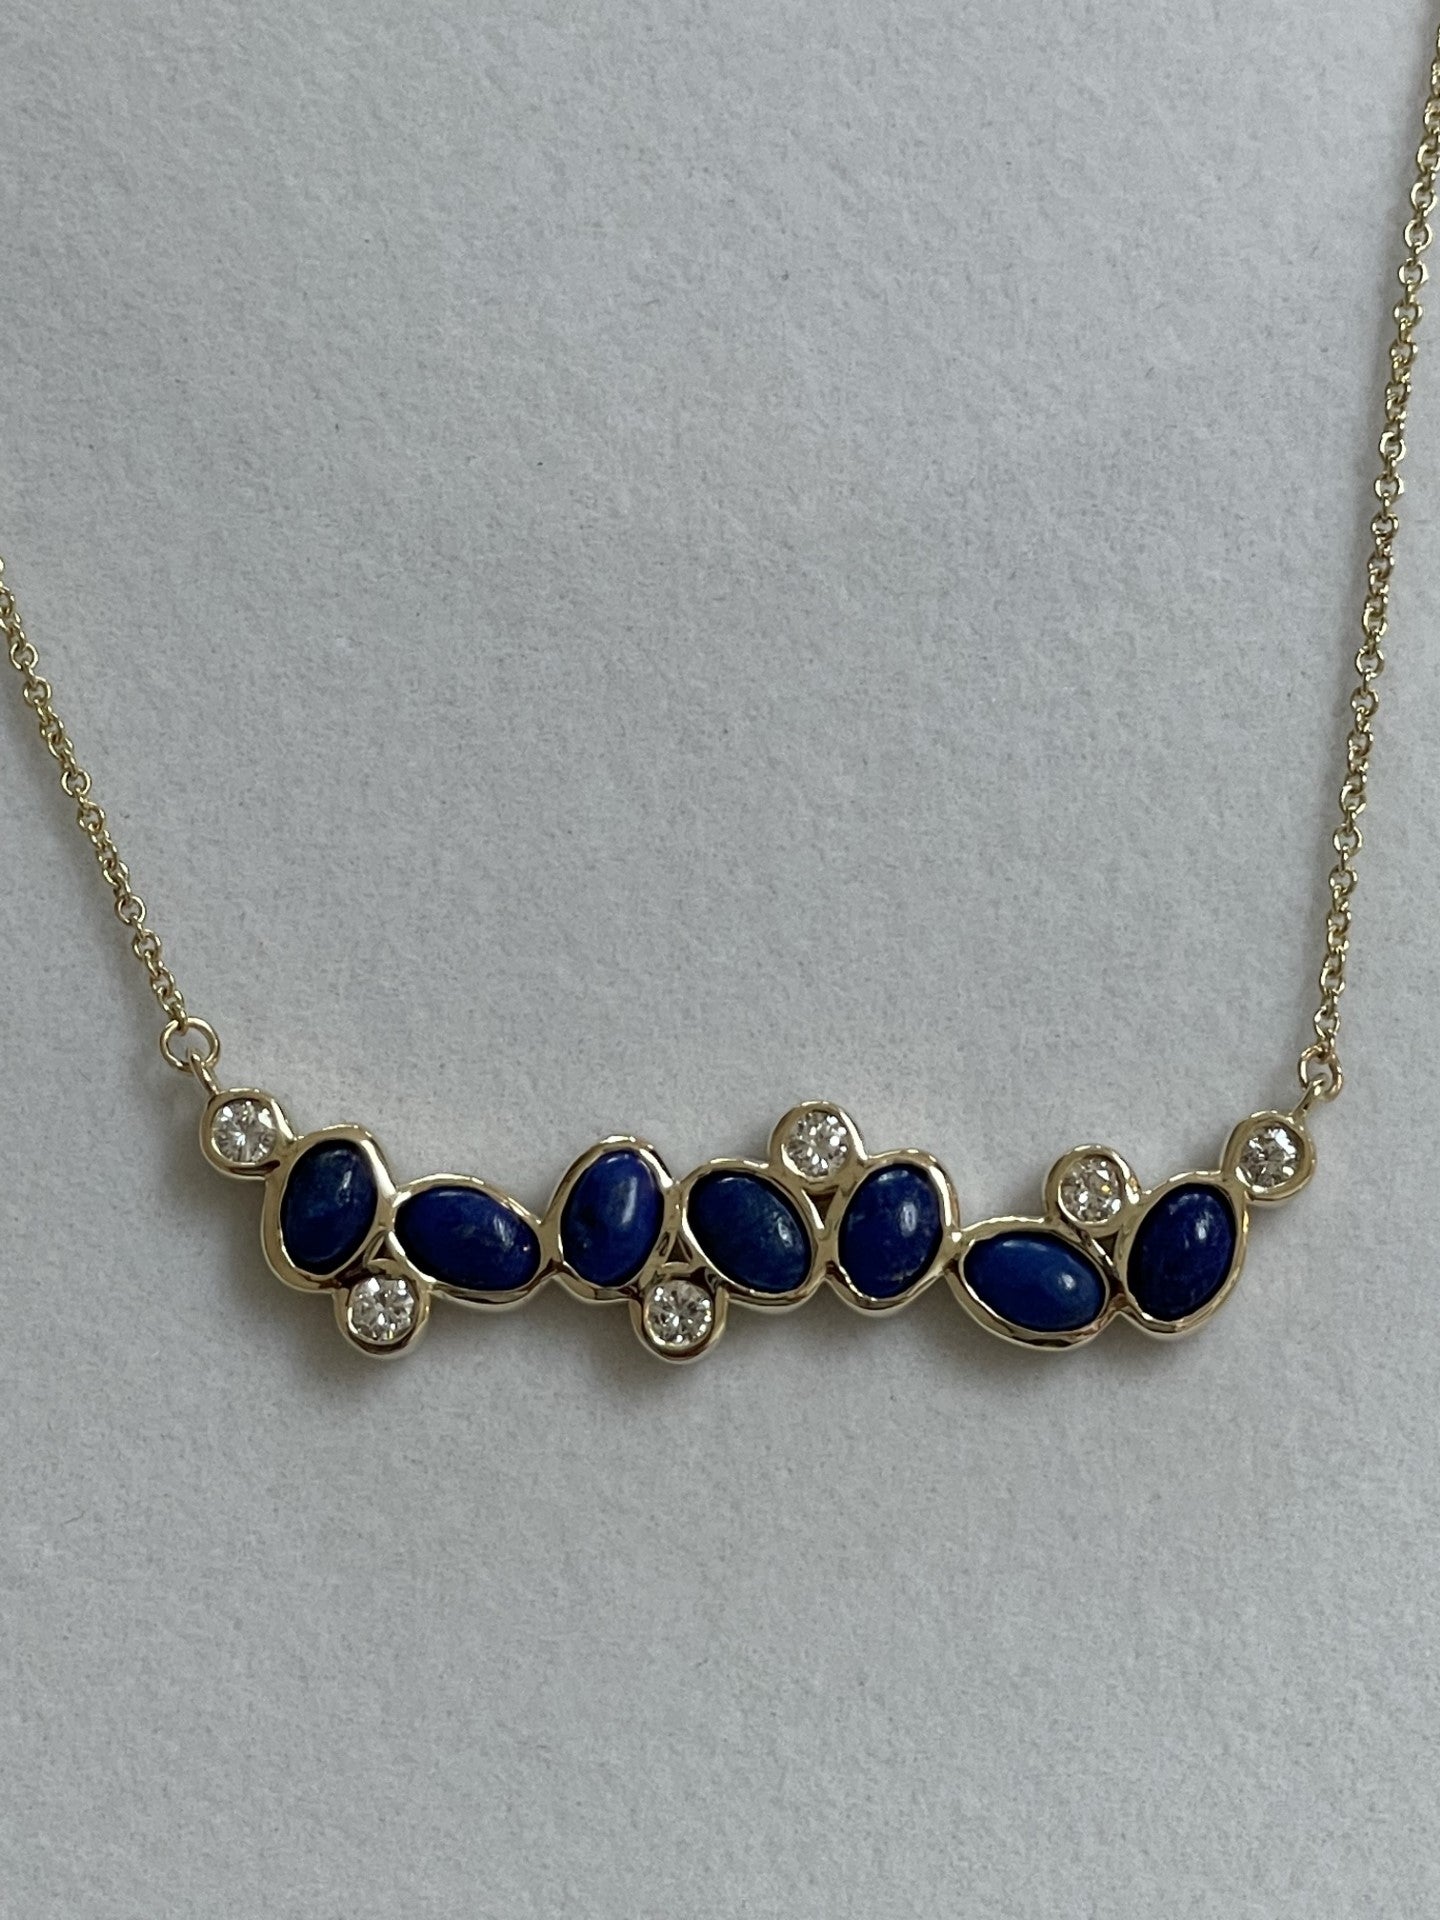 Blue Lapis and diamond pendant necklace